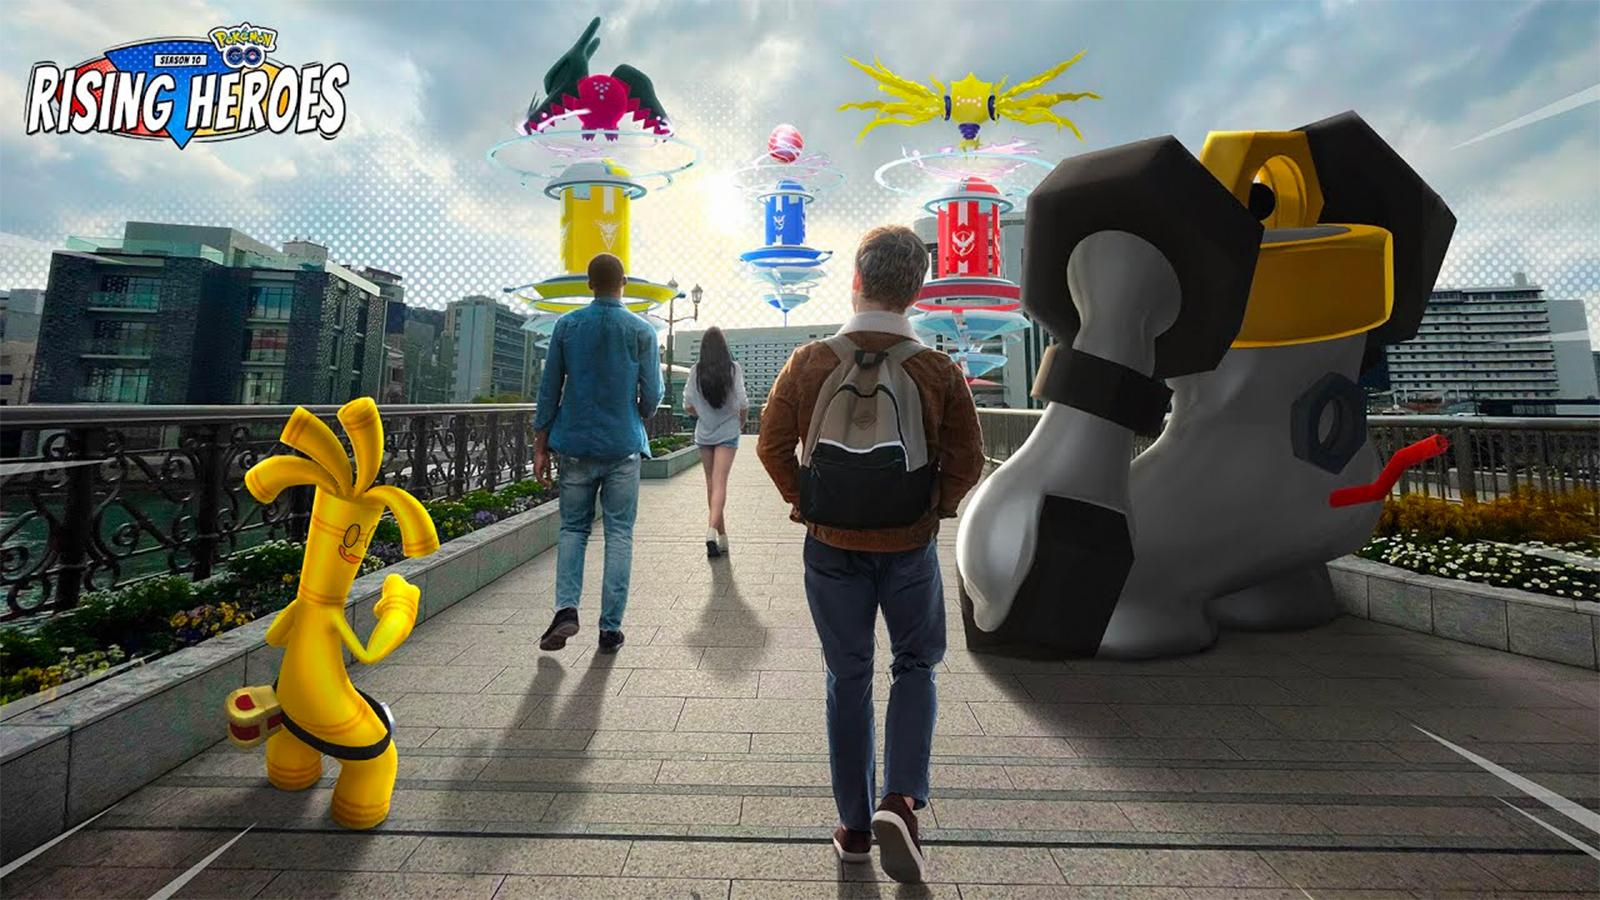 A poster for Pokemon Go Season 10 Rising Heroes